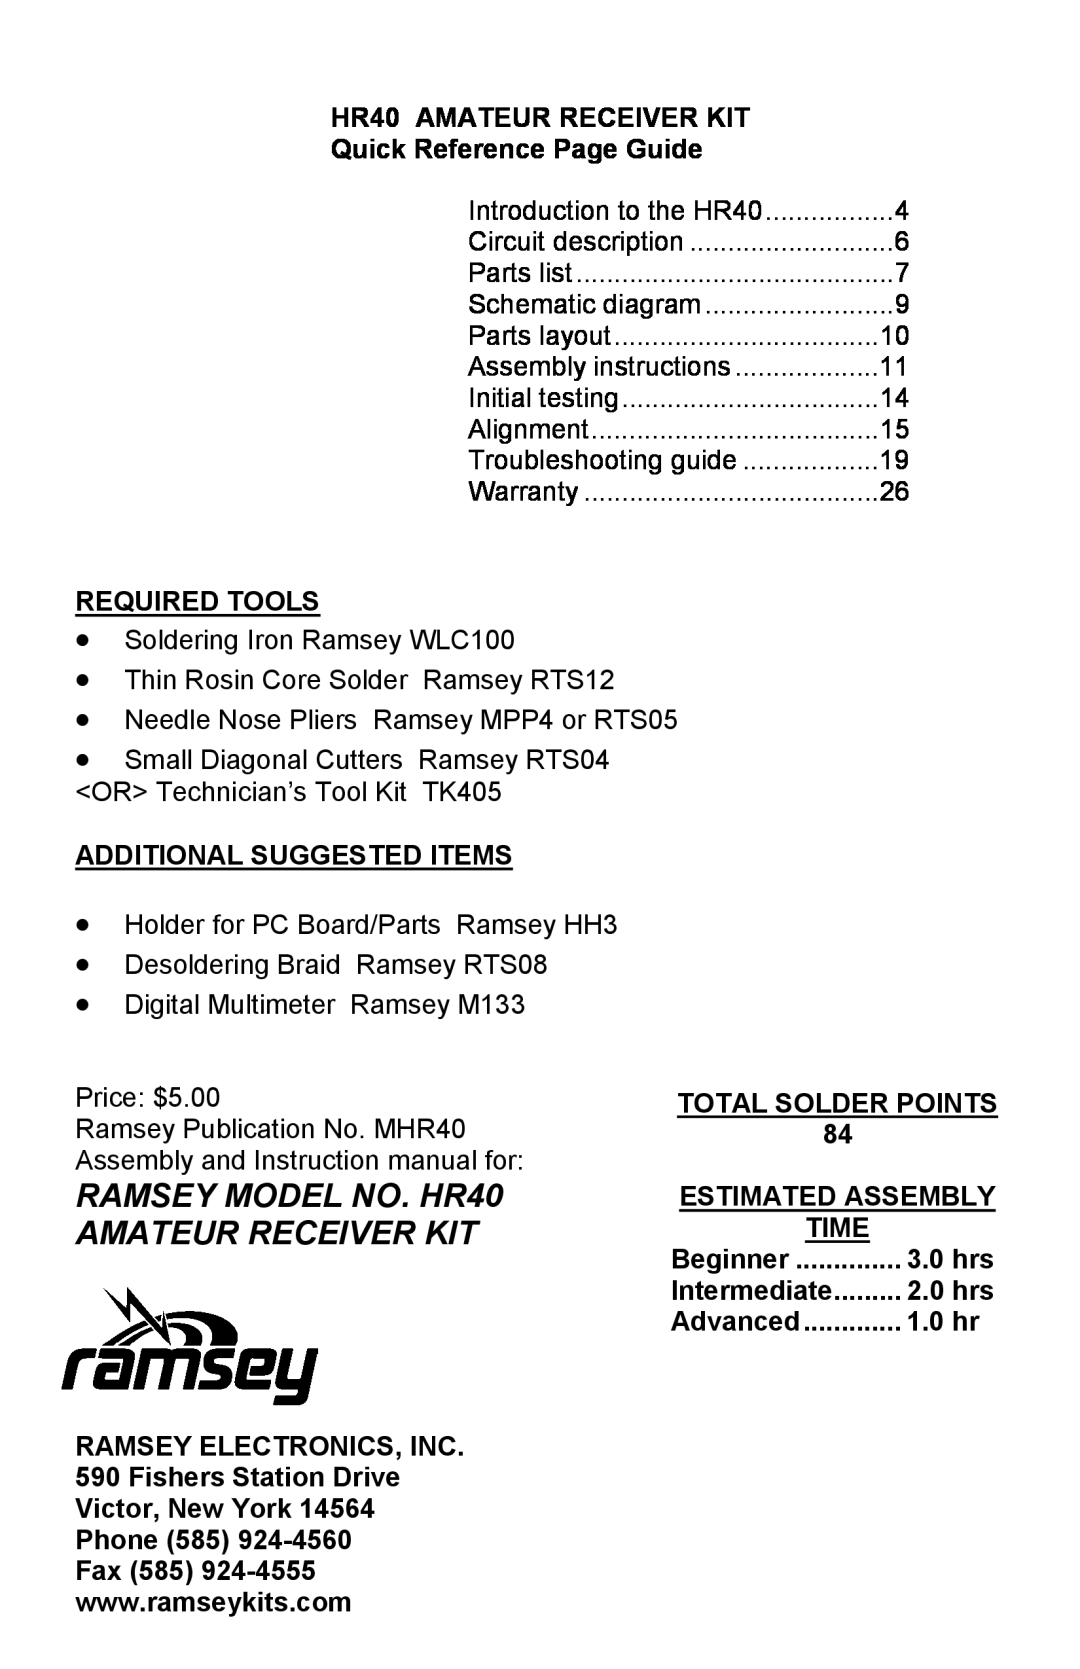 Ramsey Electronics manual RAMSEY MODEL NO. HR40 AMATEUR RECEIVER KIT 